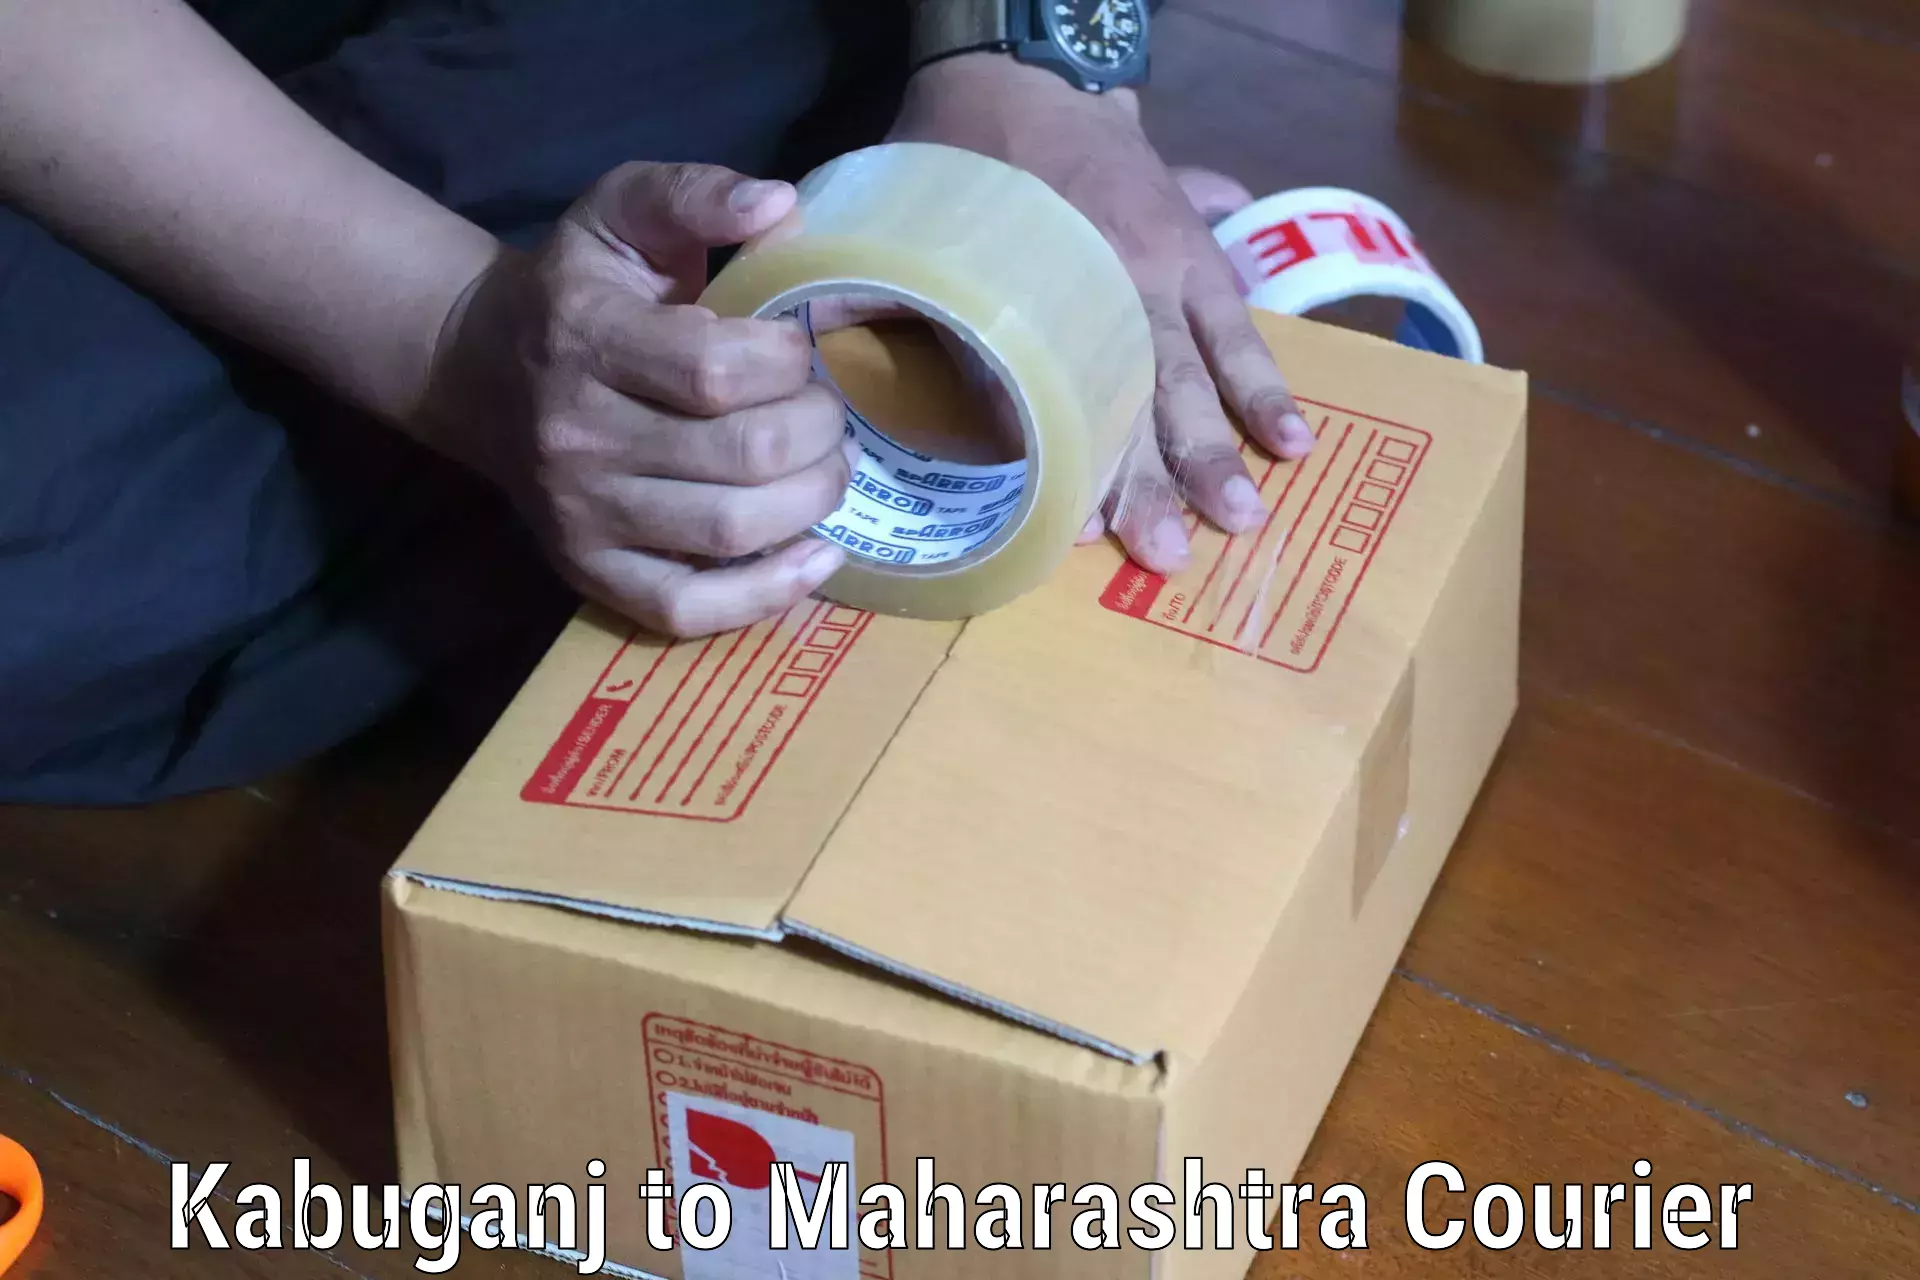 Courier service partnerships Kabuganj to Chandrapur